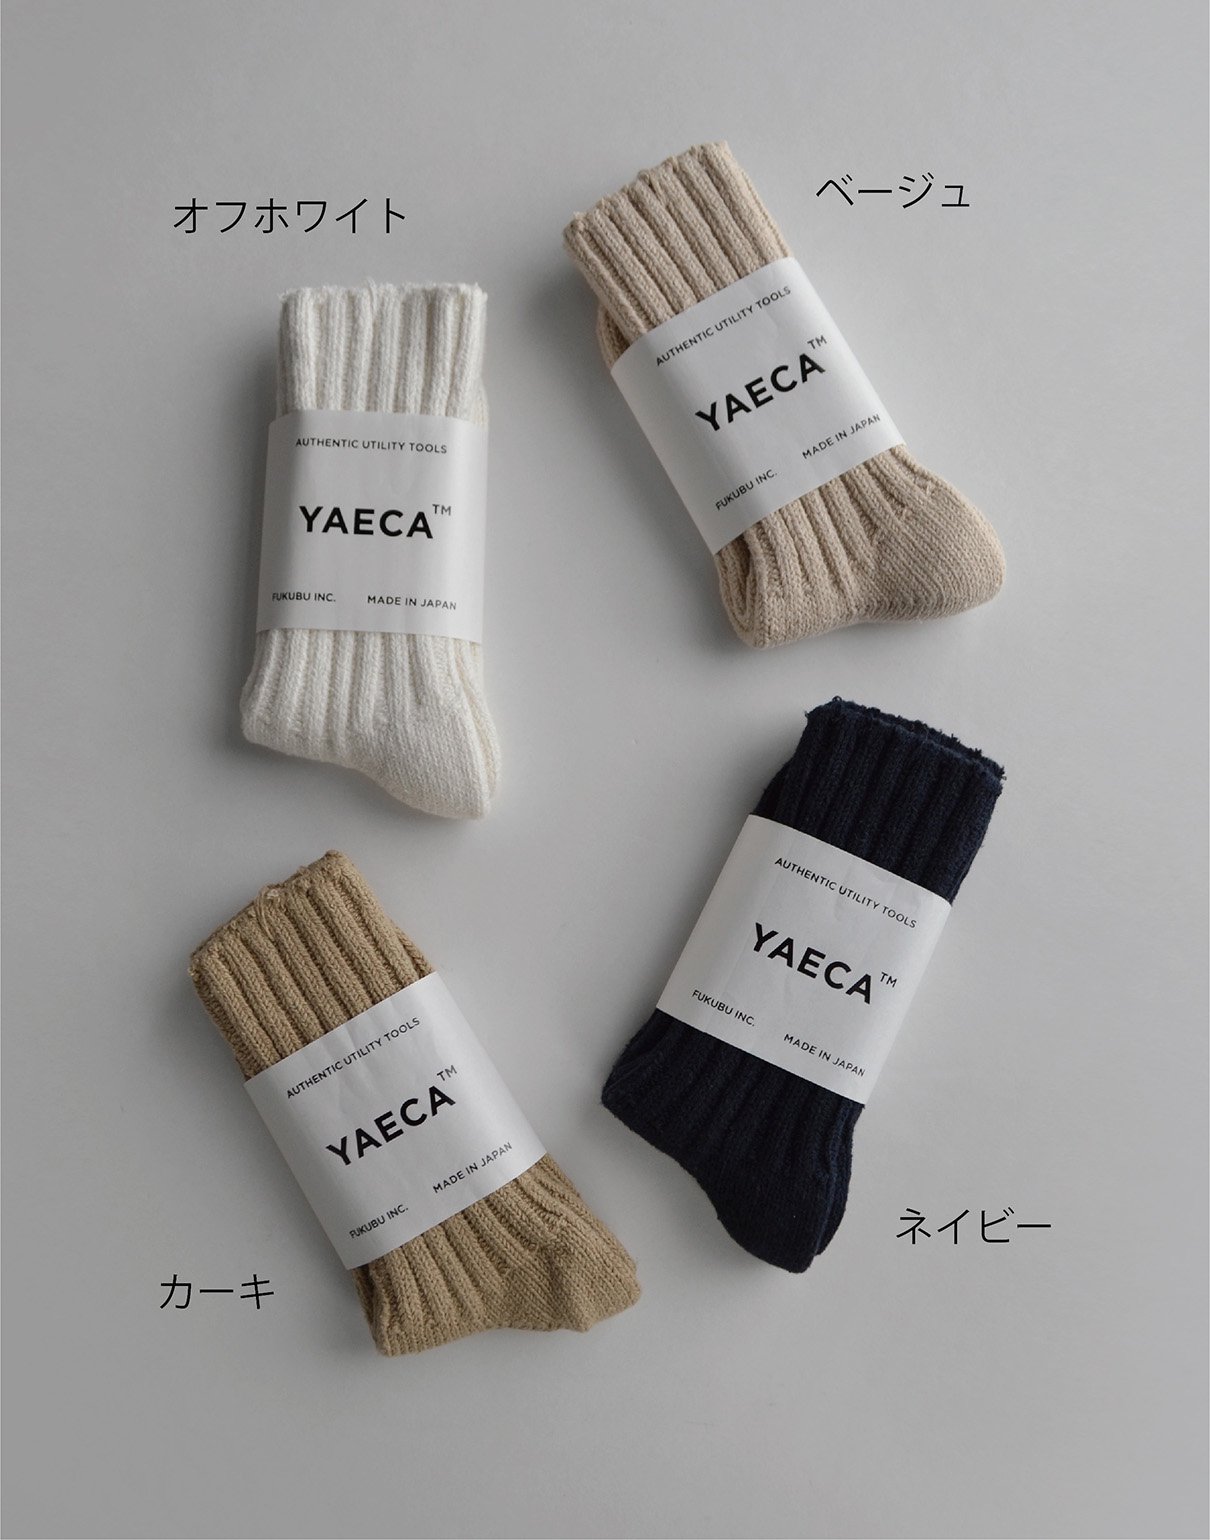 YAECA cotton silk socks 全4色